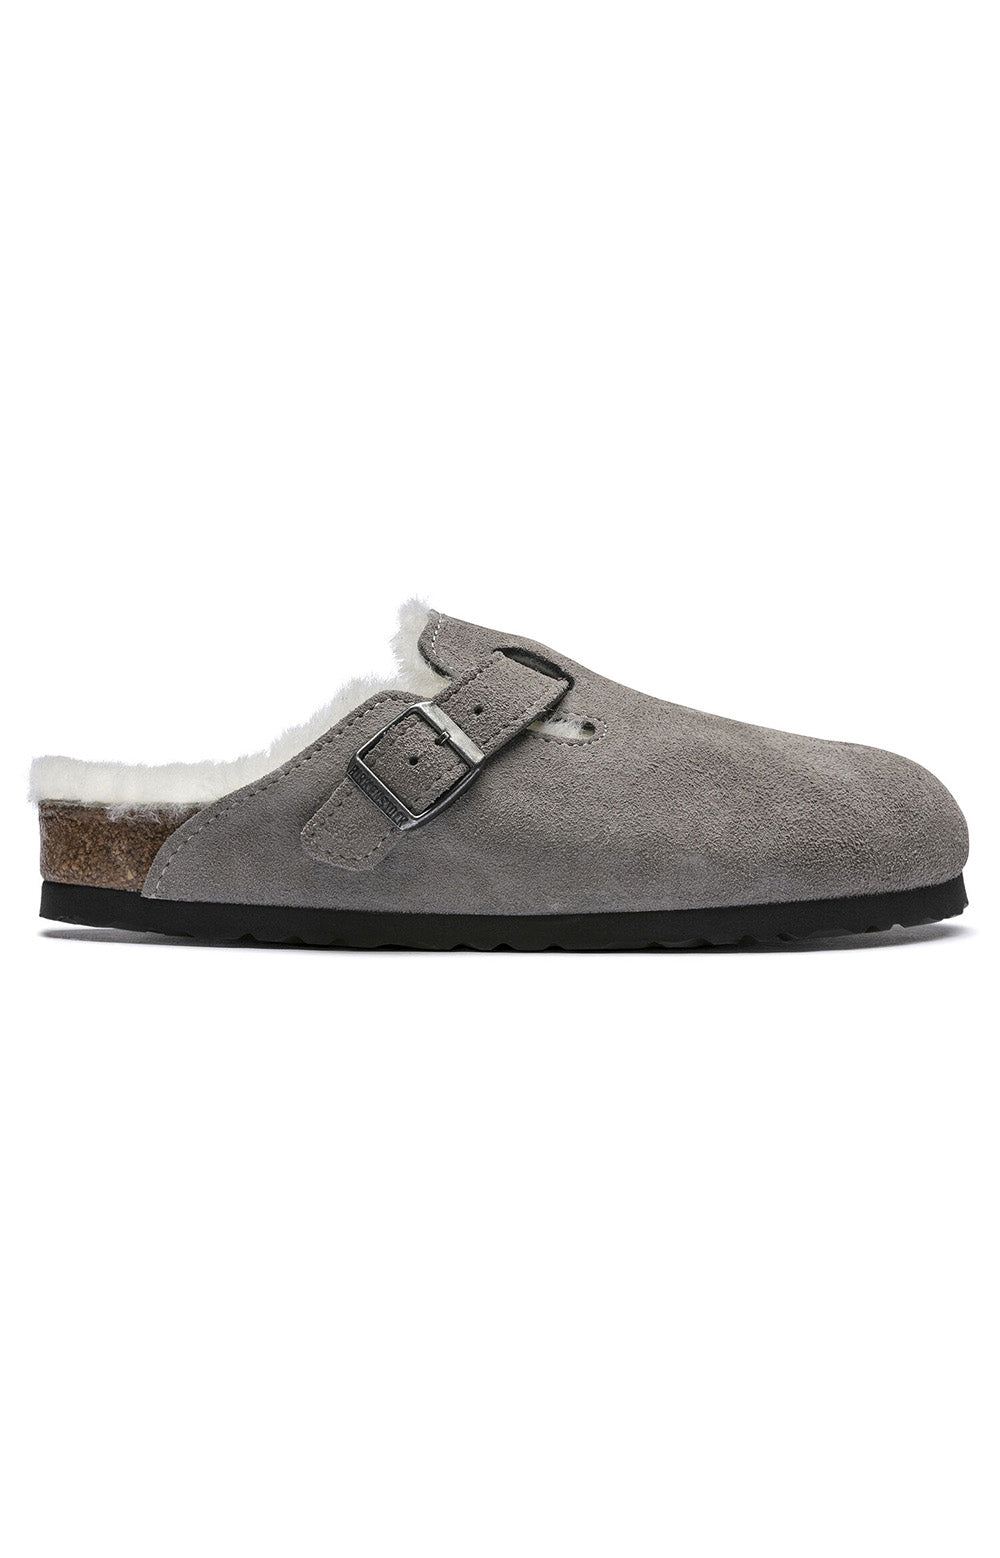 (1017650) Boston Shearling Sandals - Stone